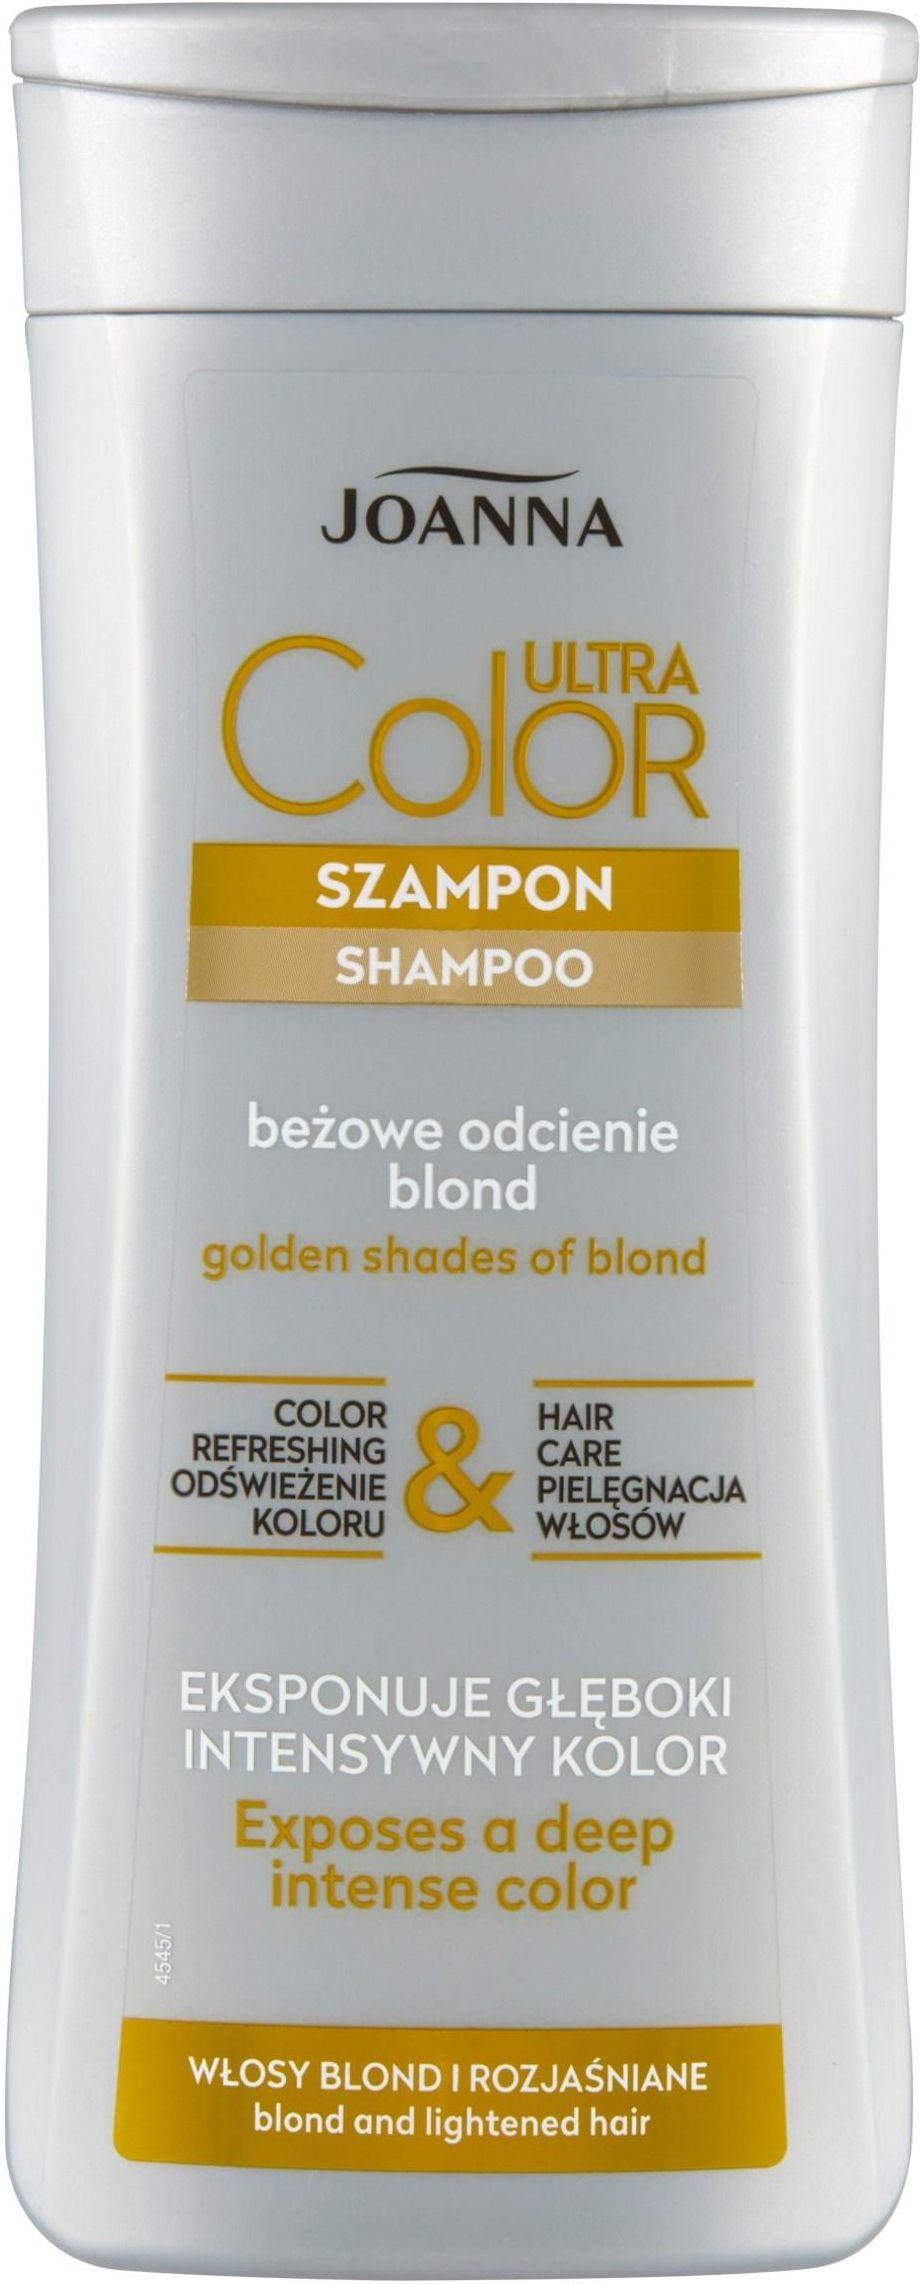 szampon joanna ochladzajacy blond